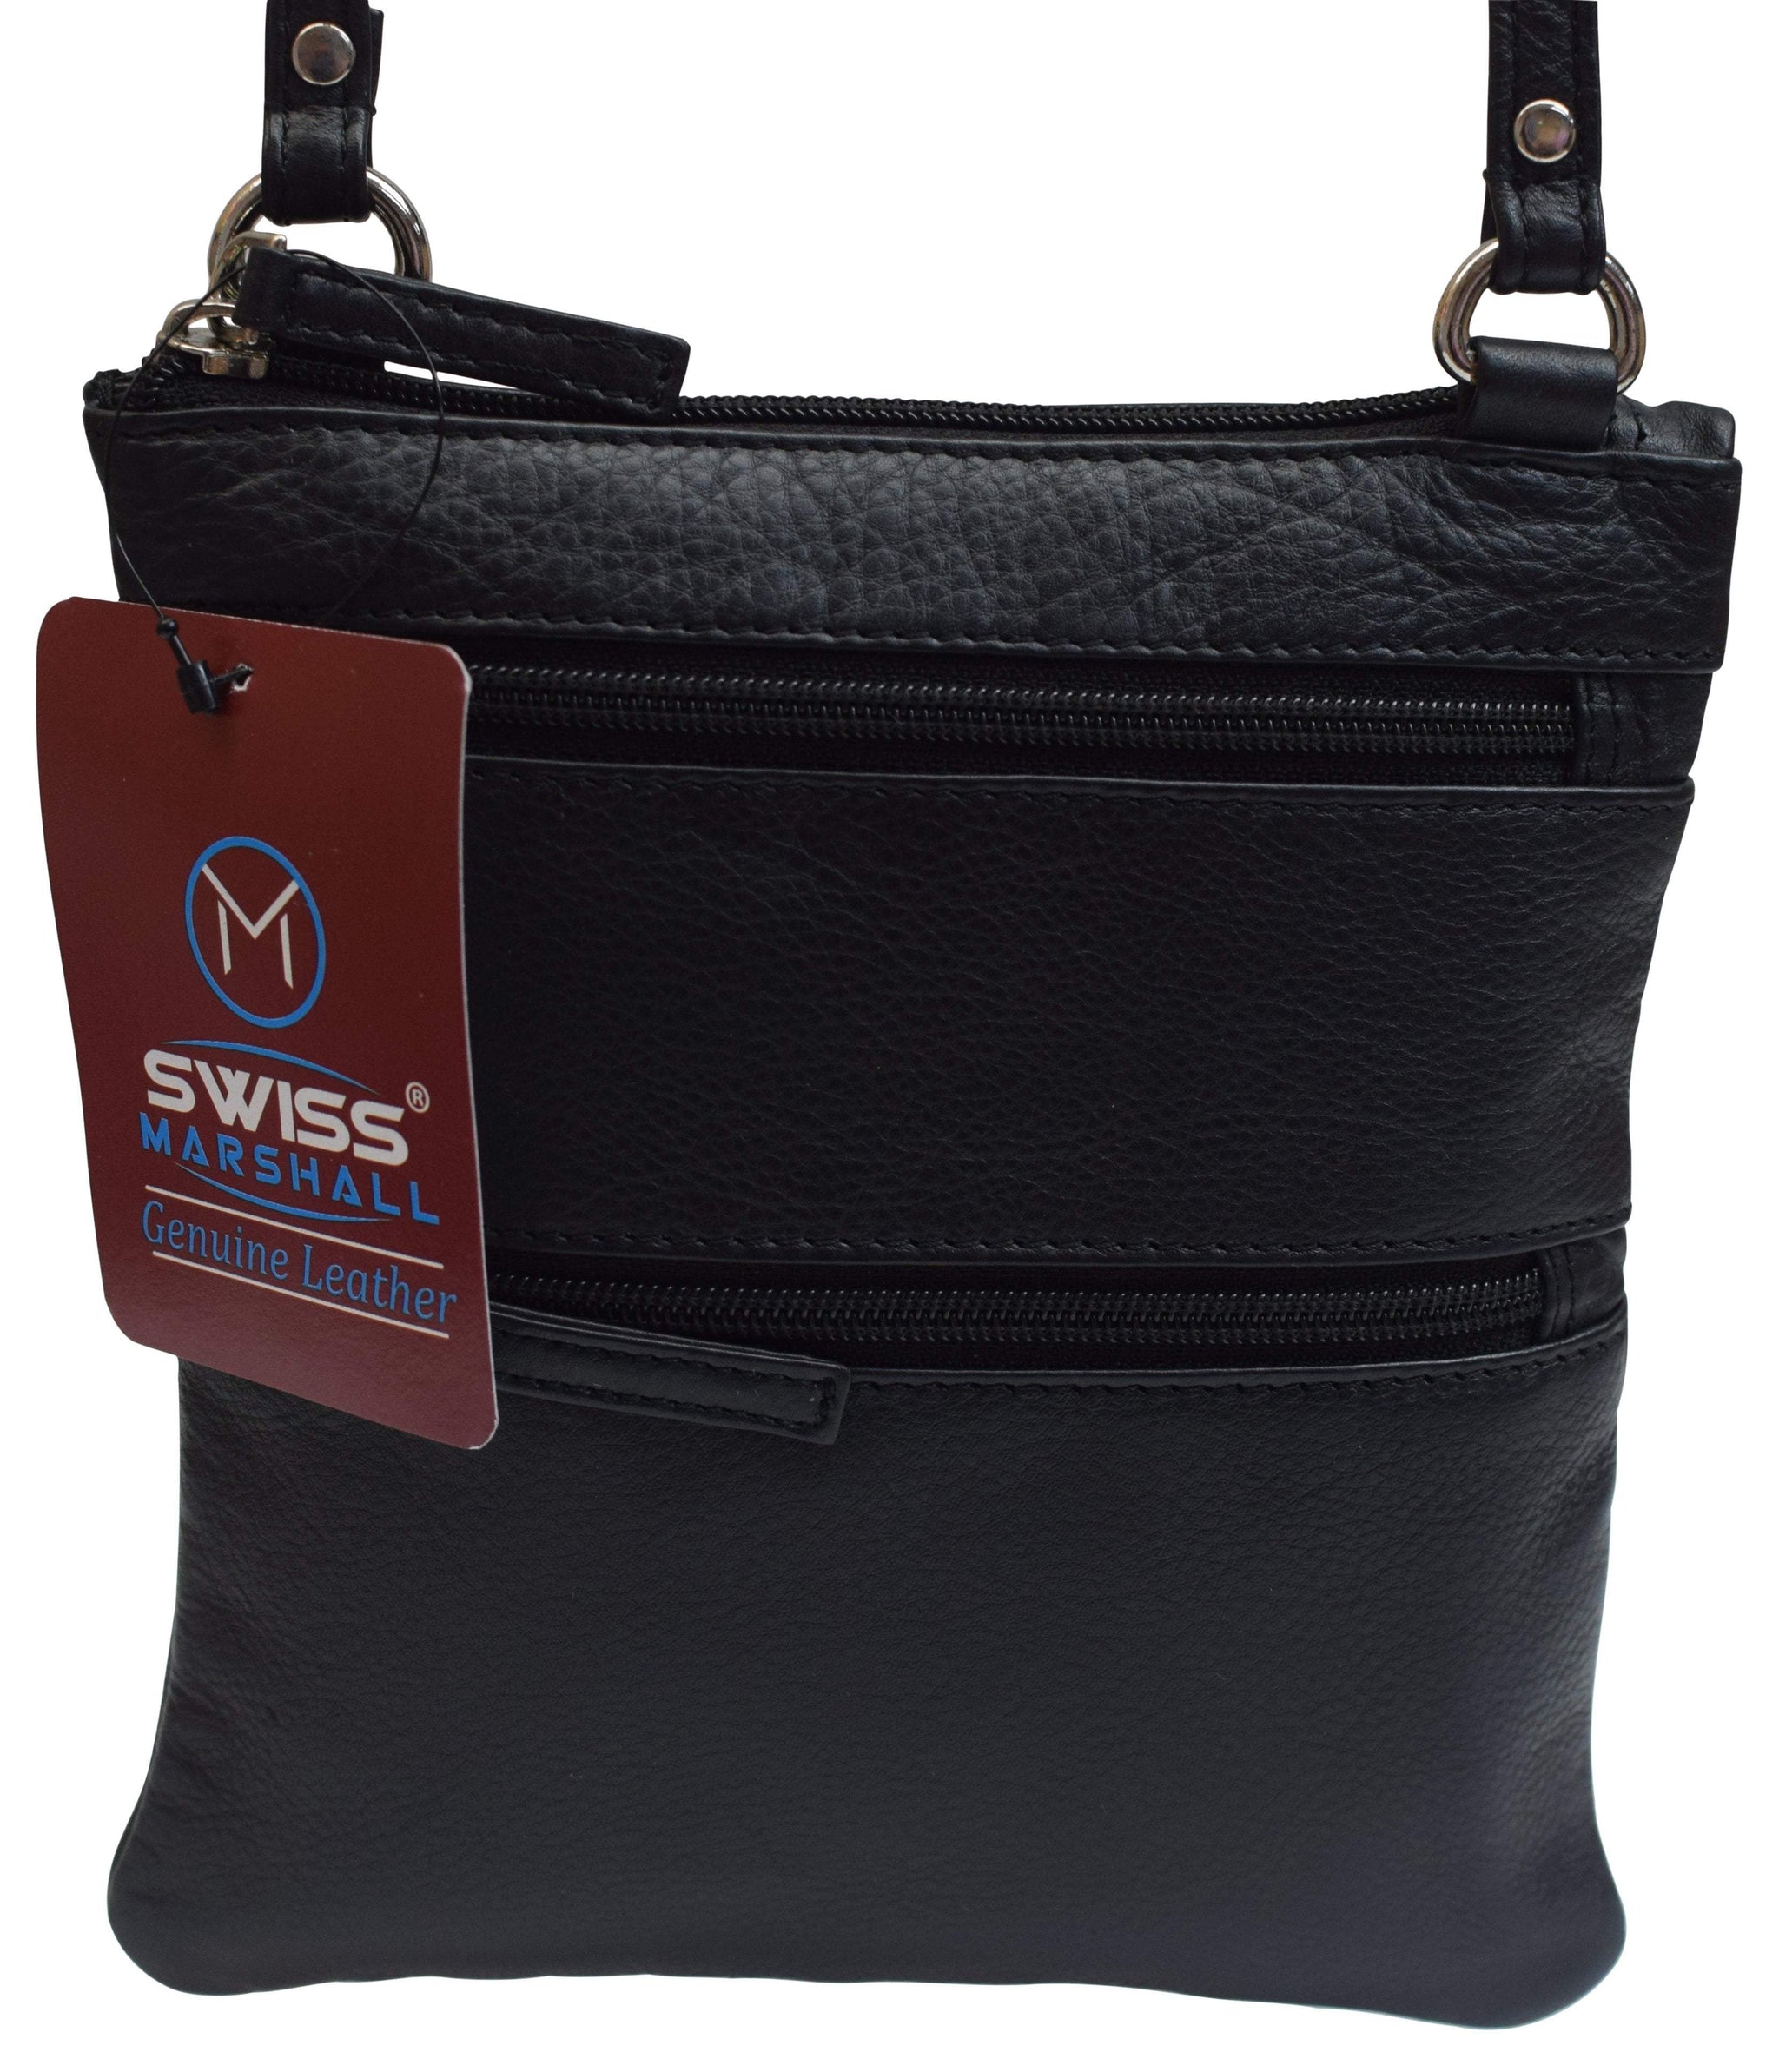 menswallet - / Womens Leather Handbags Shoulder Bag Small Bags Luxury  Designer Crossbody Purses for Ladies